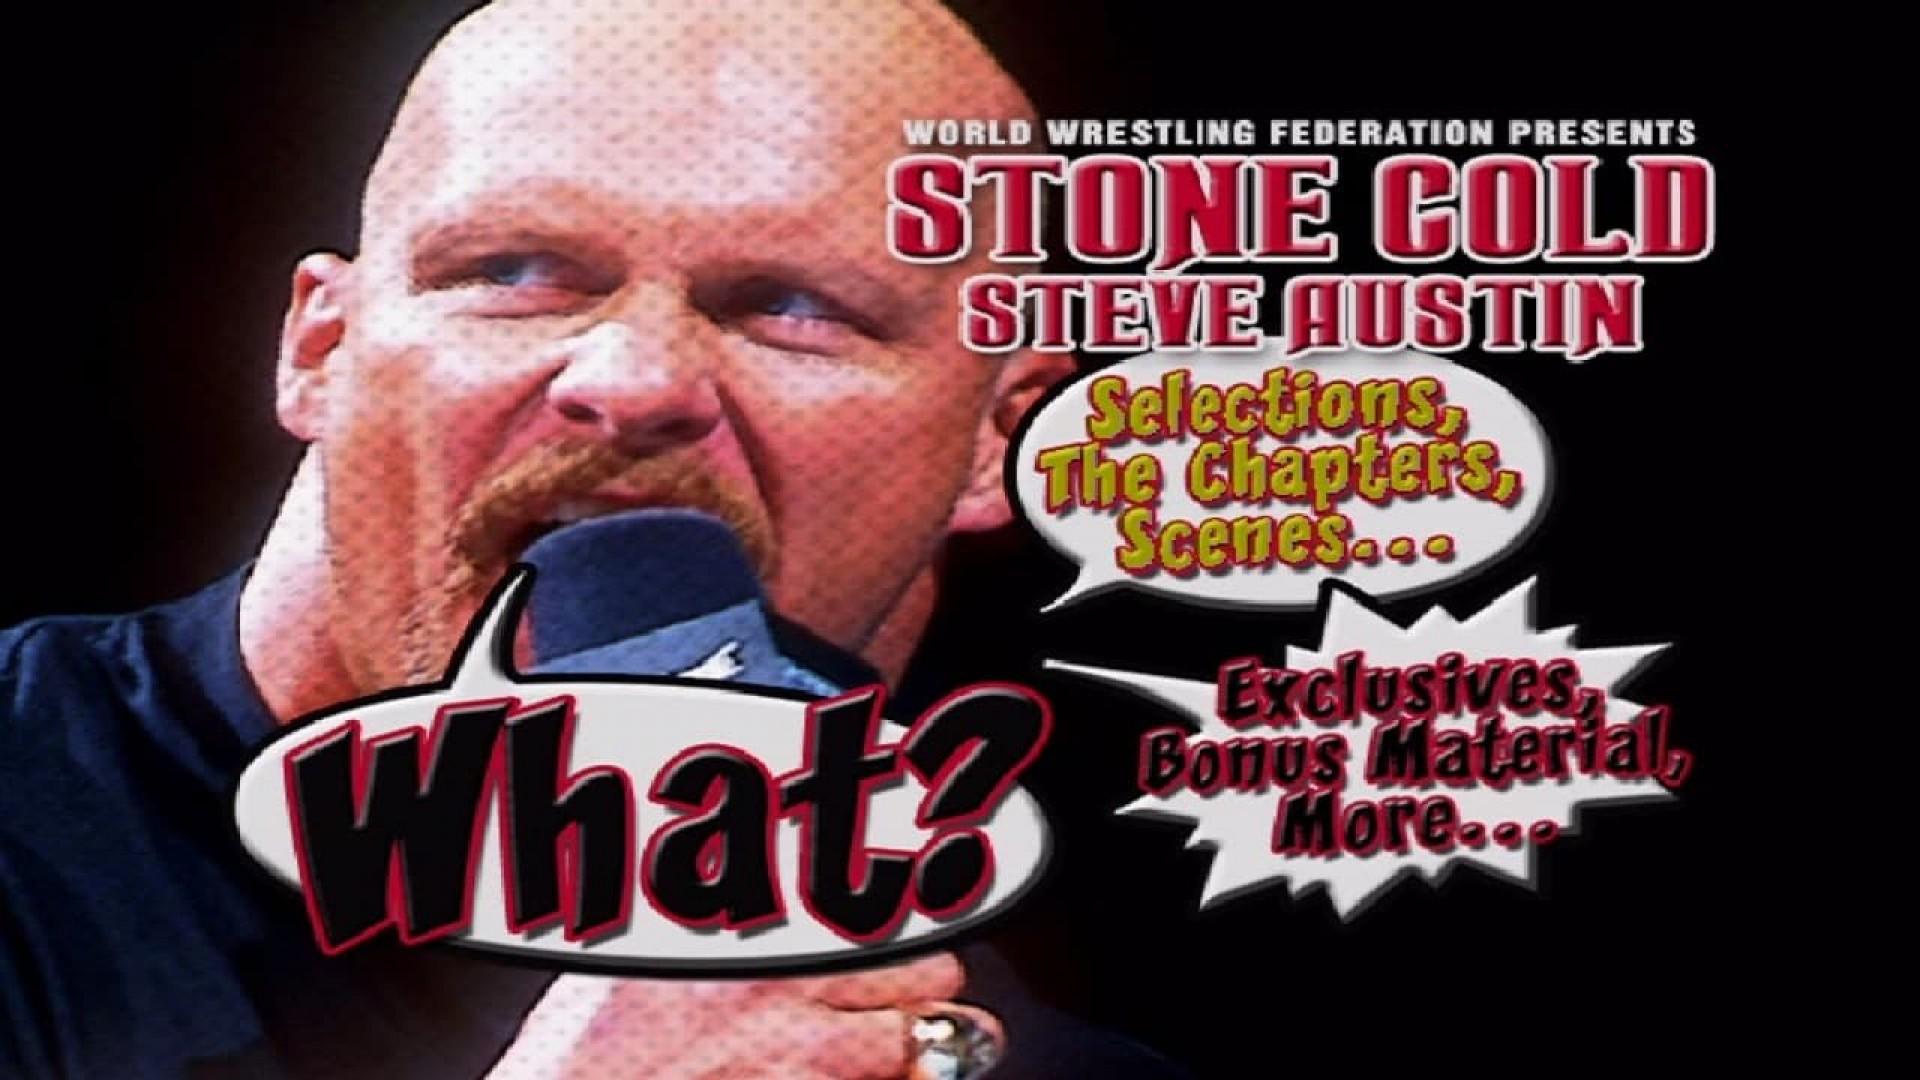 WWF: Stone Cold Steve Austin: What?